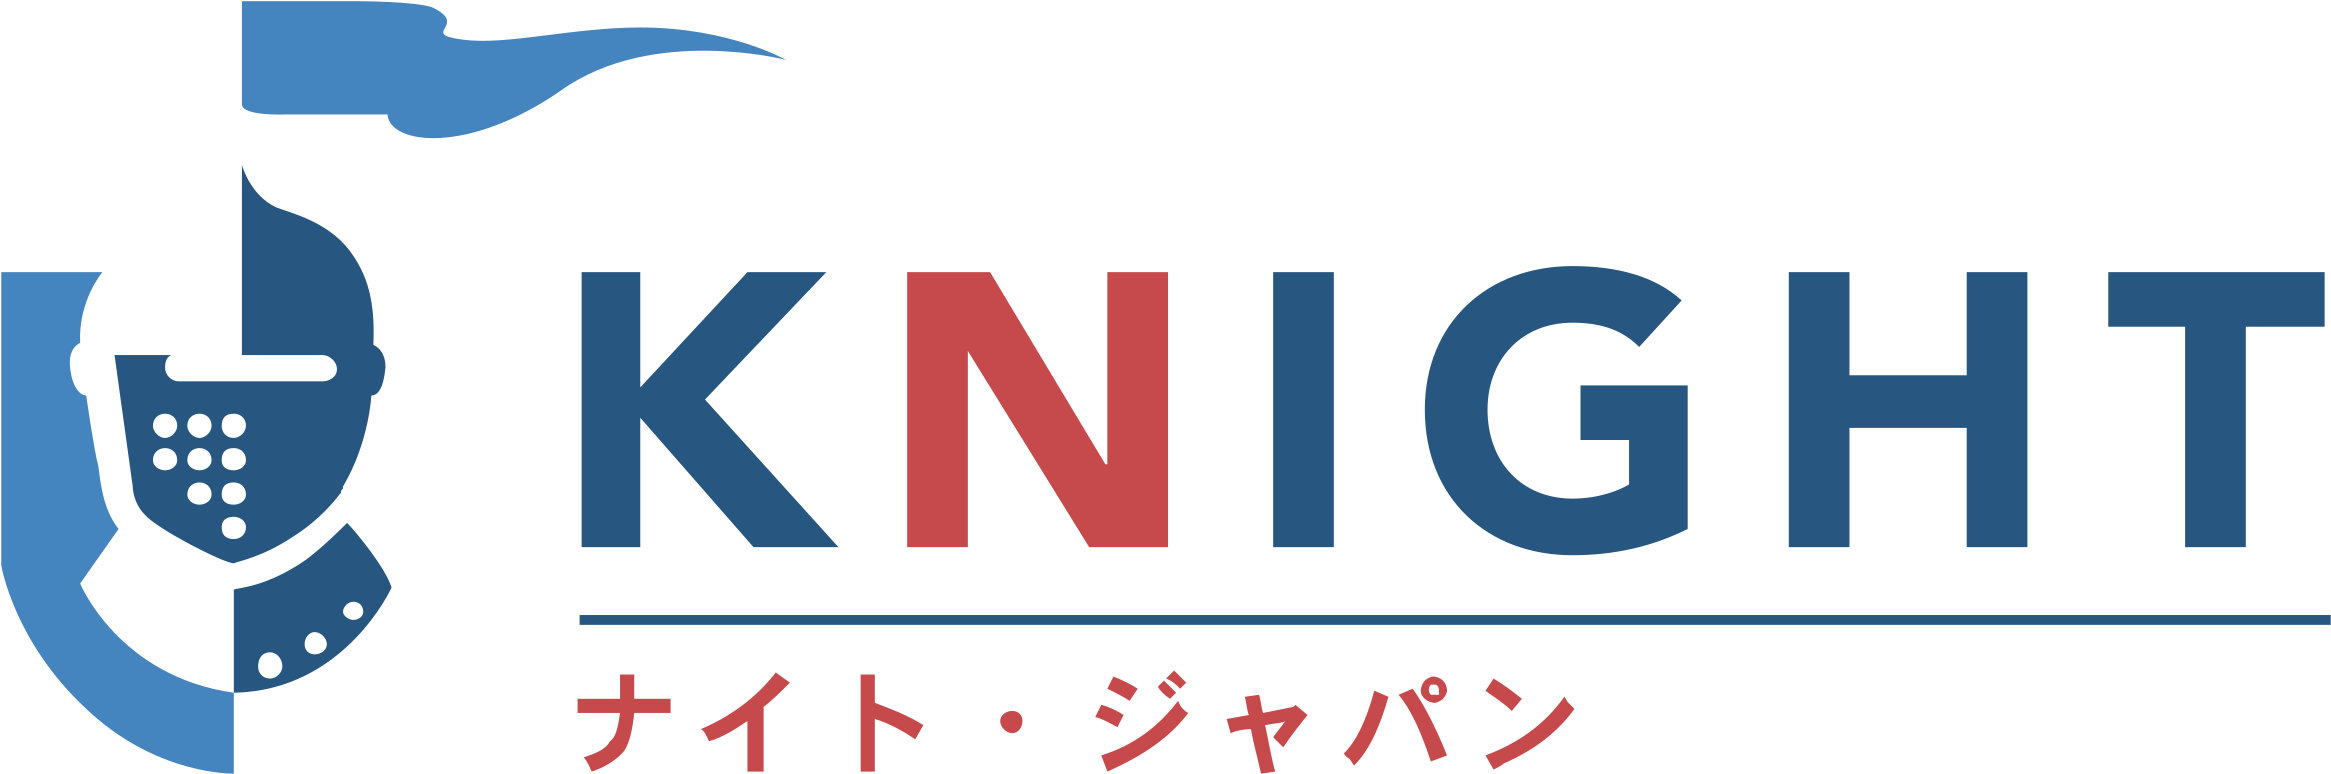 Knight Logo Png Transparent Knight Vector